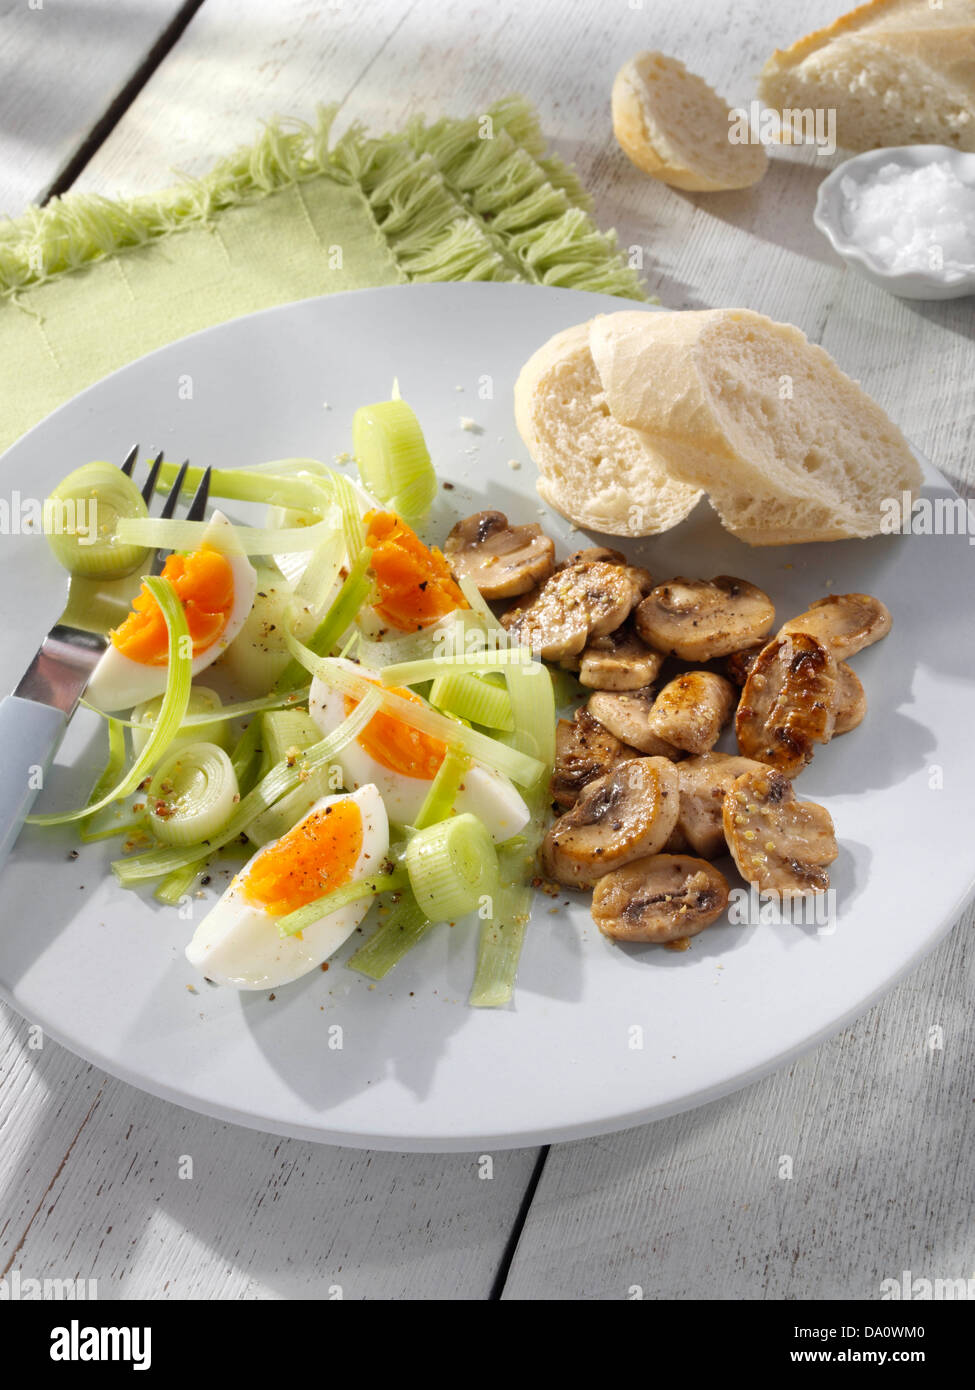 Porree-Eiersalat mit Champignons und Brot Stockfotografie - Alamy